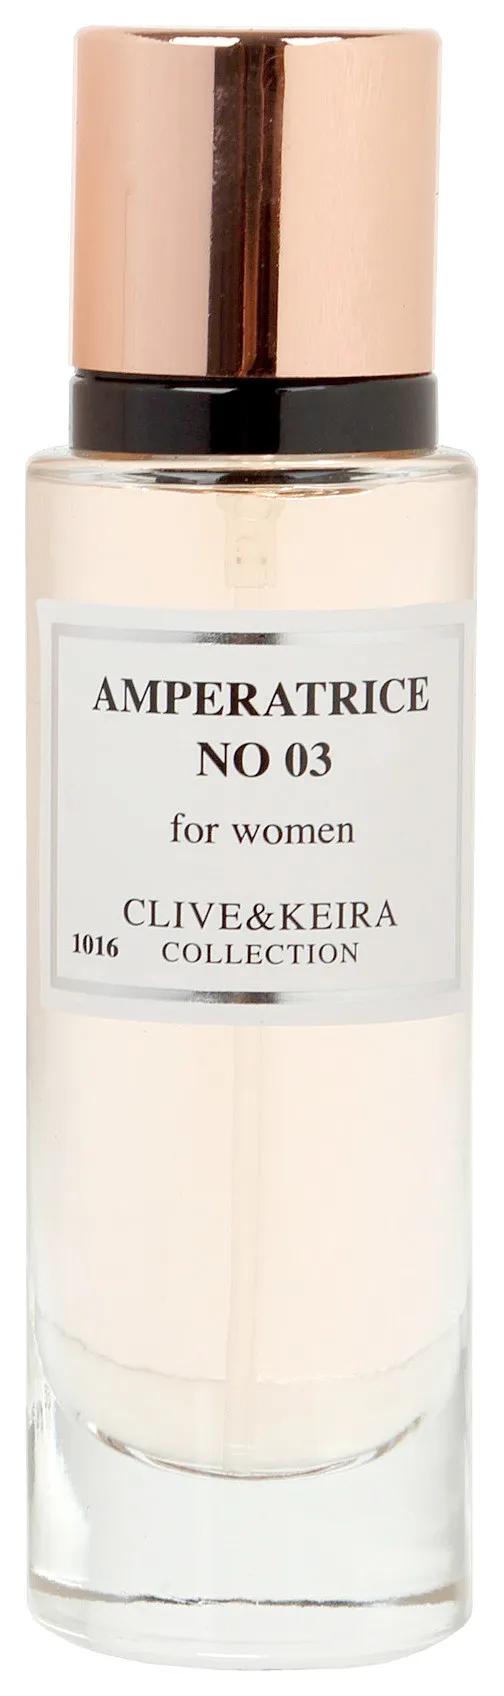 Парфюмерная вода Clive Keira 1016 L'Imperatrice 3 Dolce&Gabbana, для женщин, 30 мл#4